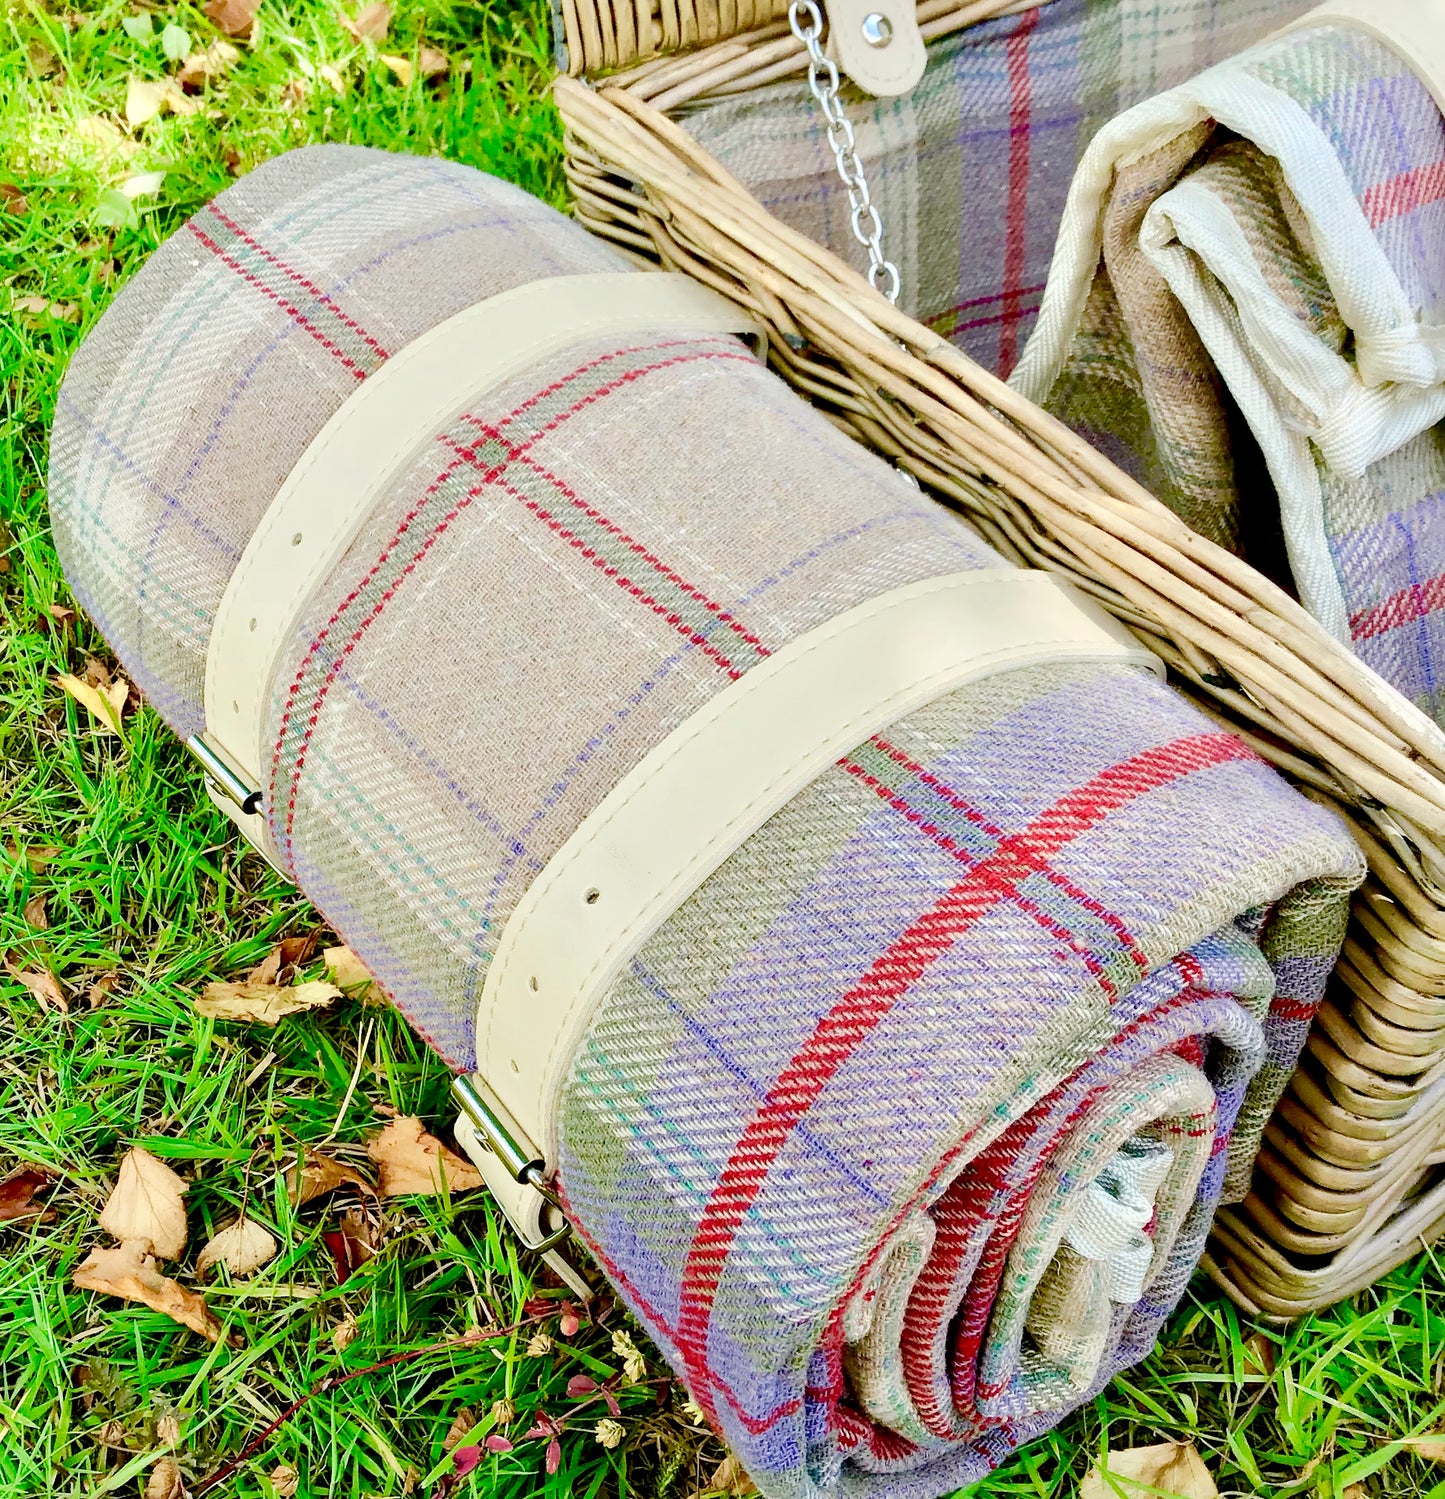 waterproof backed picnic rug